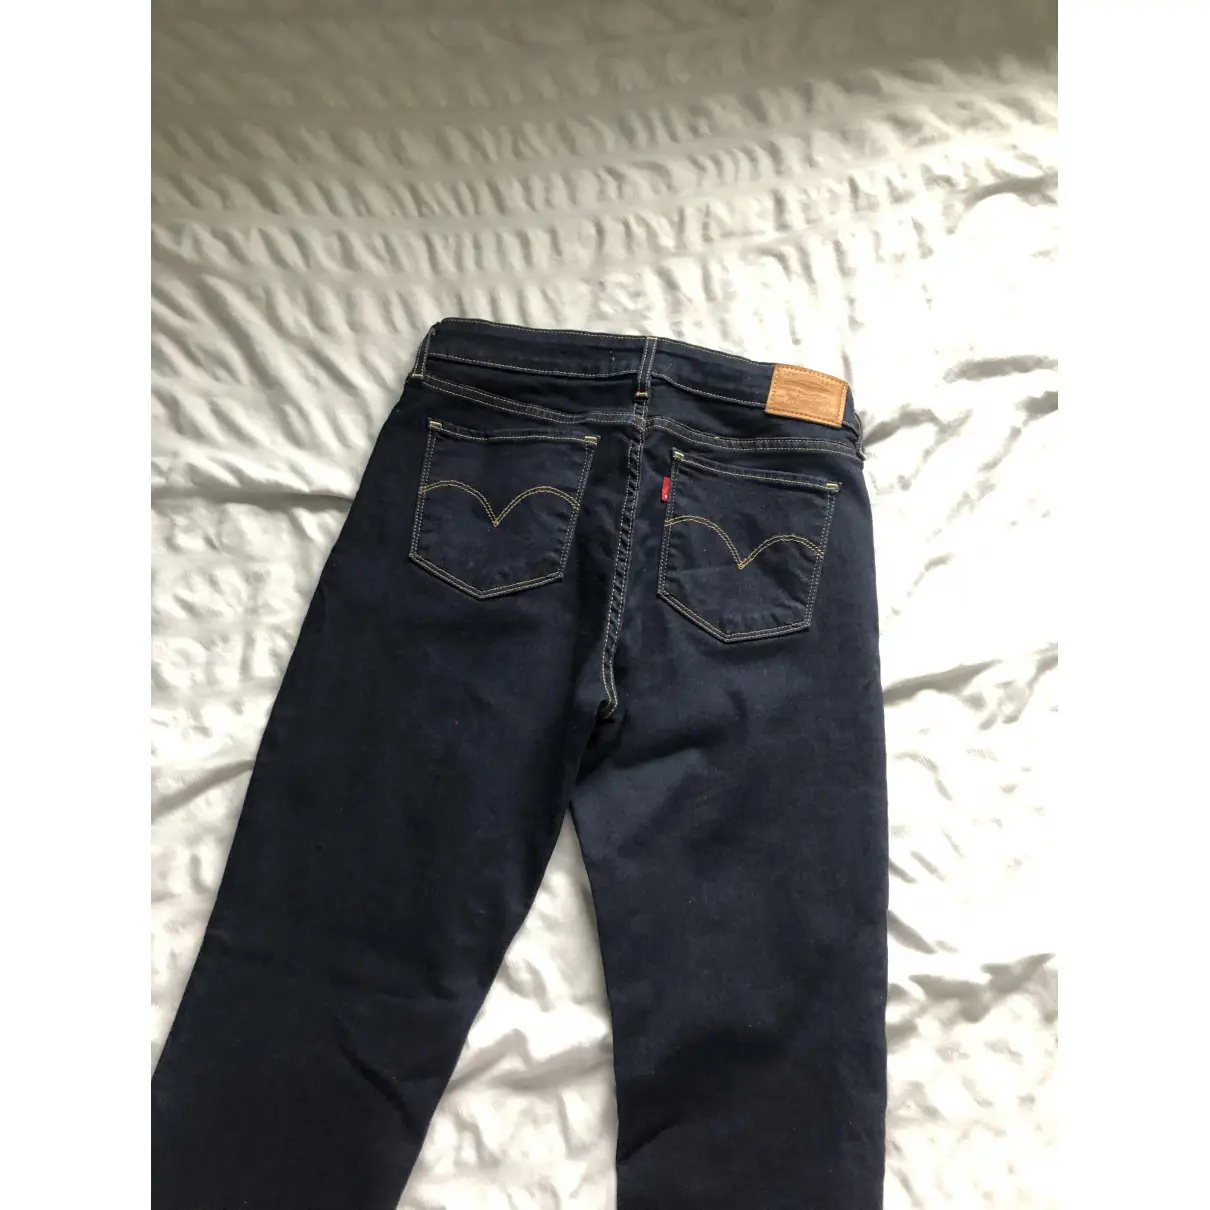 Buy Levi's Navy Denim - Jeans Jeans online